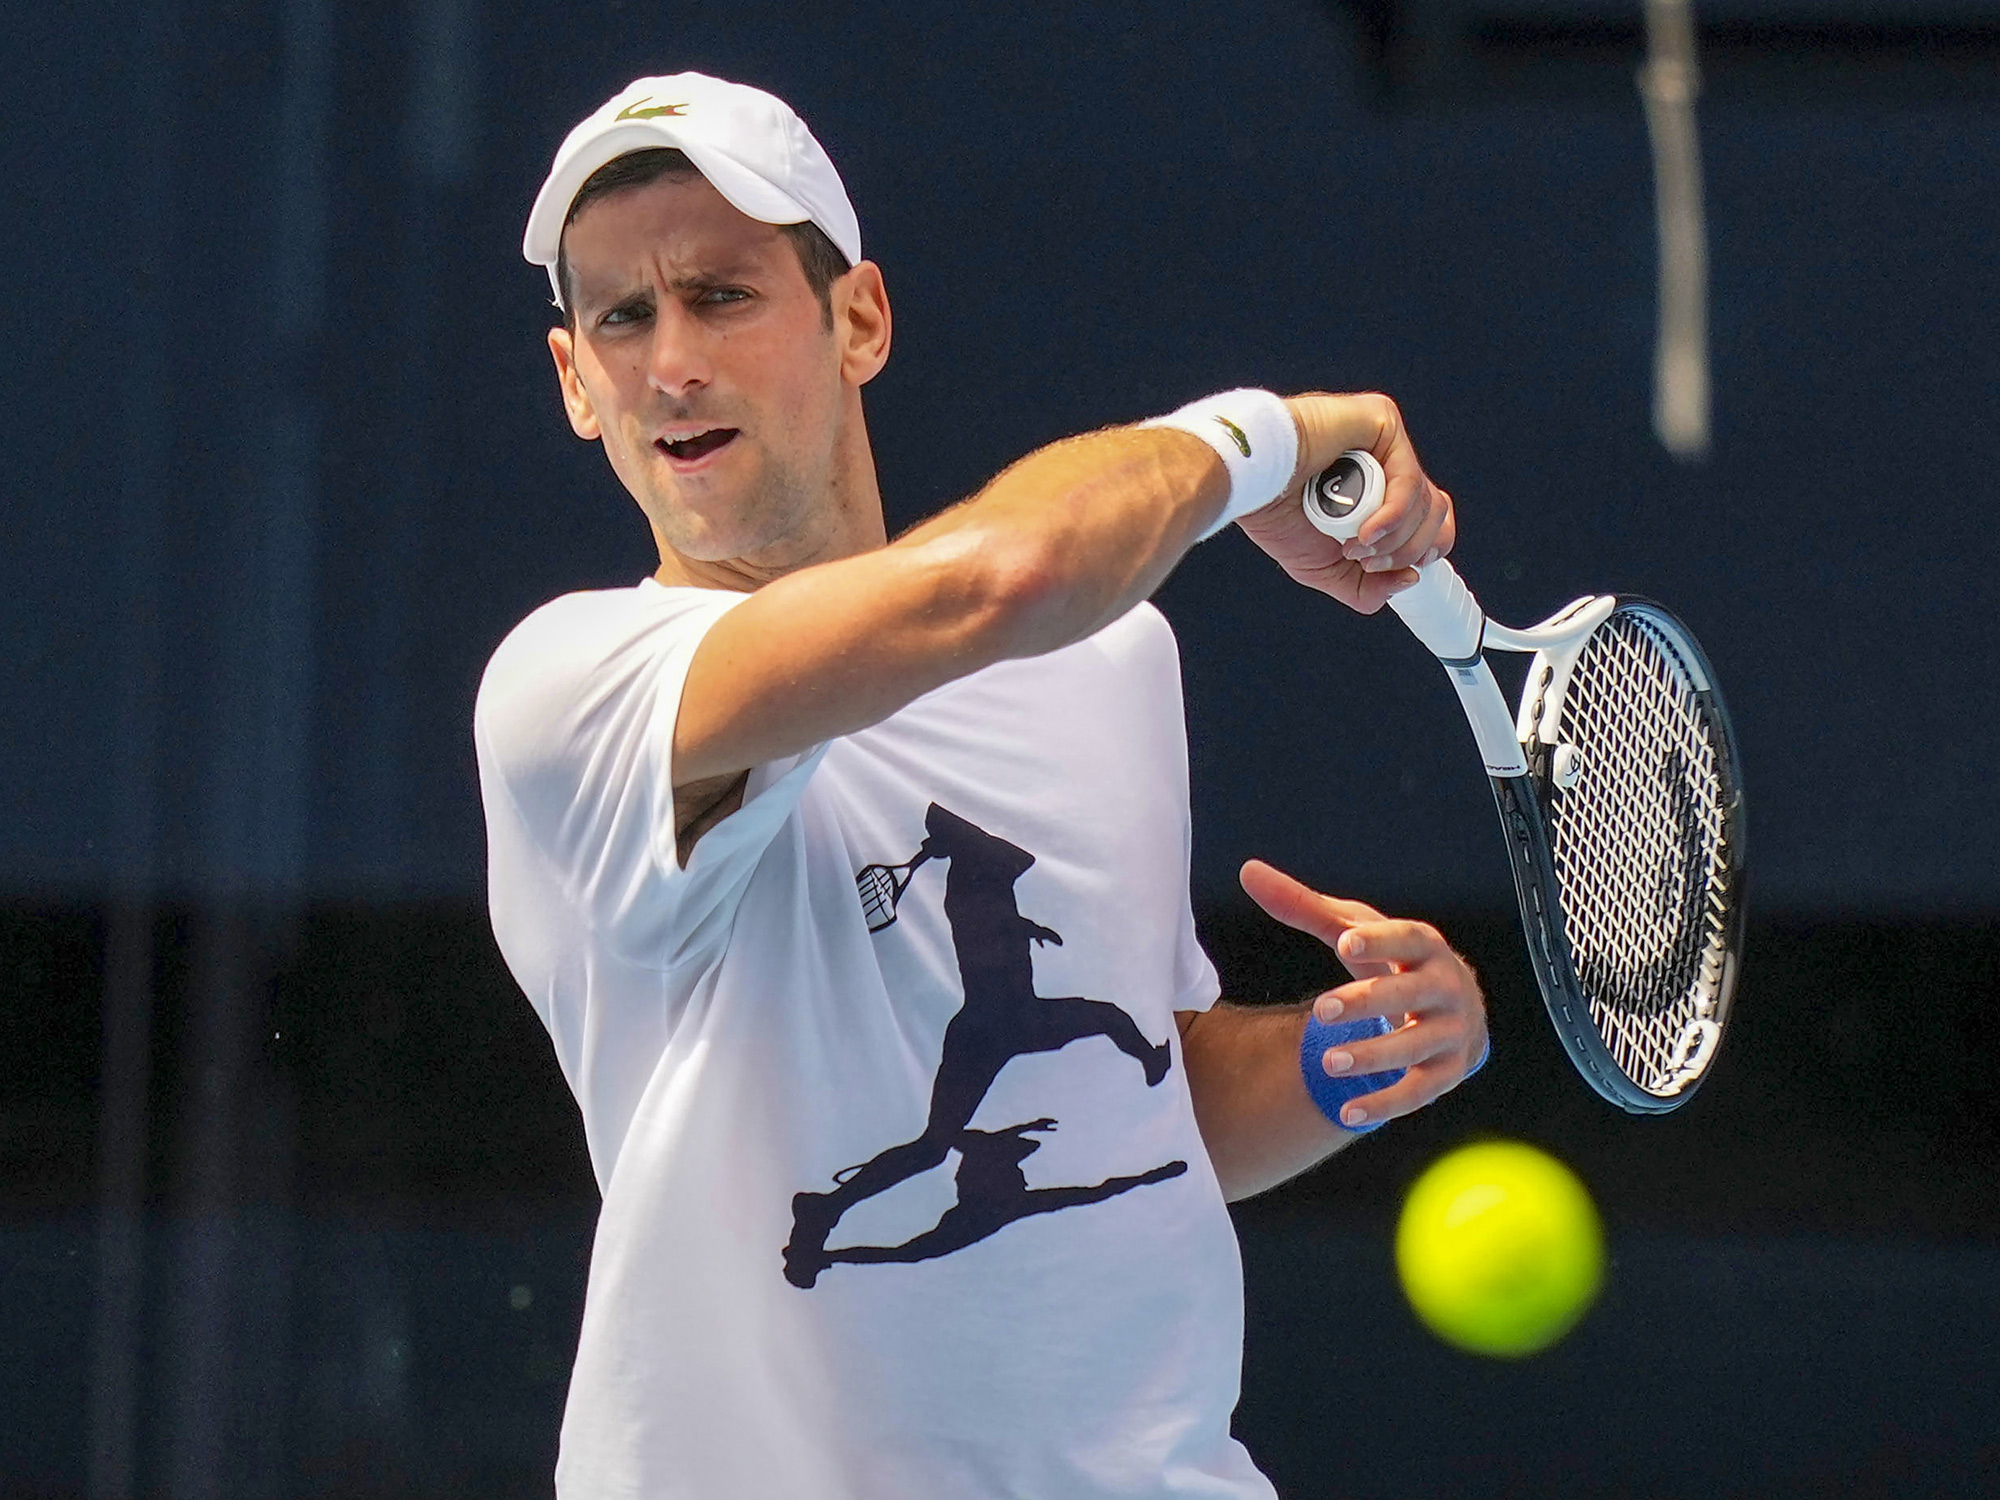 Djokovics Australia Fate Hangs in Balance as Decision Looms